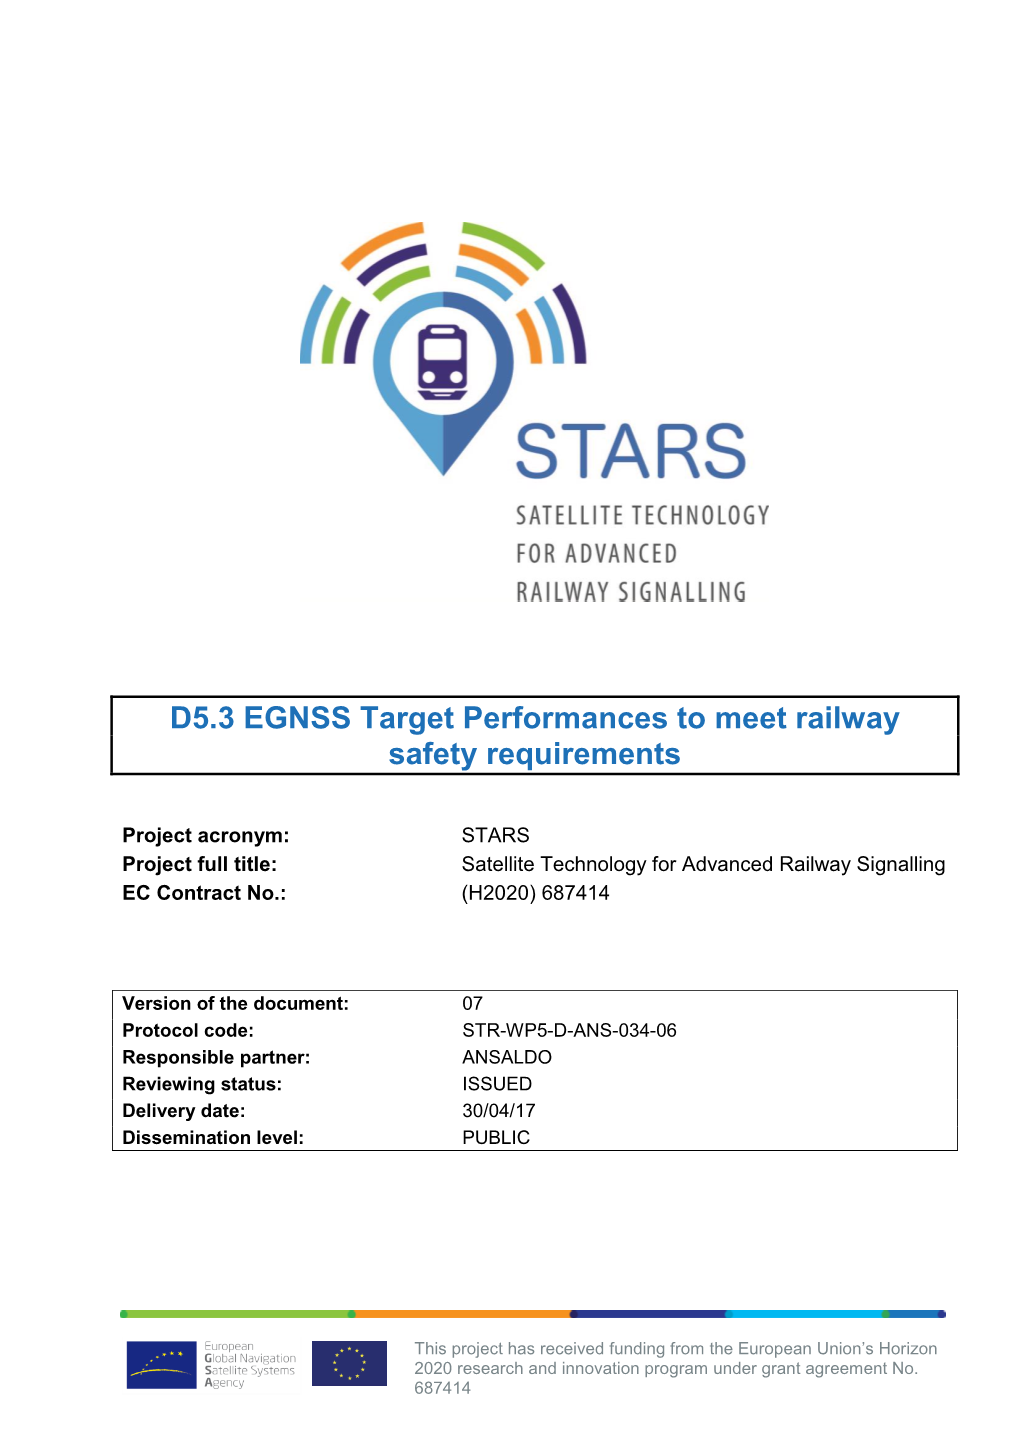 D5.3 EGNSS Target Performance to Meet Railway